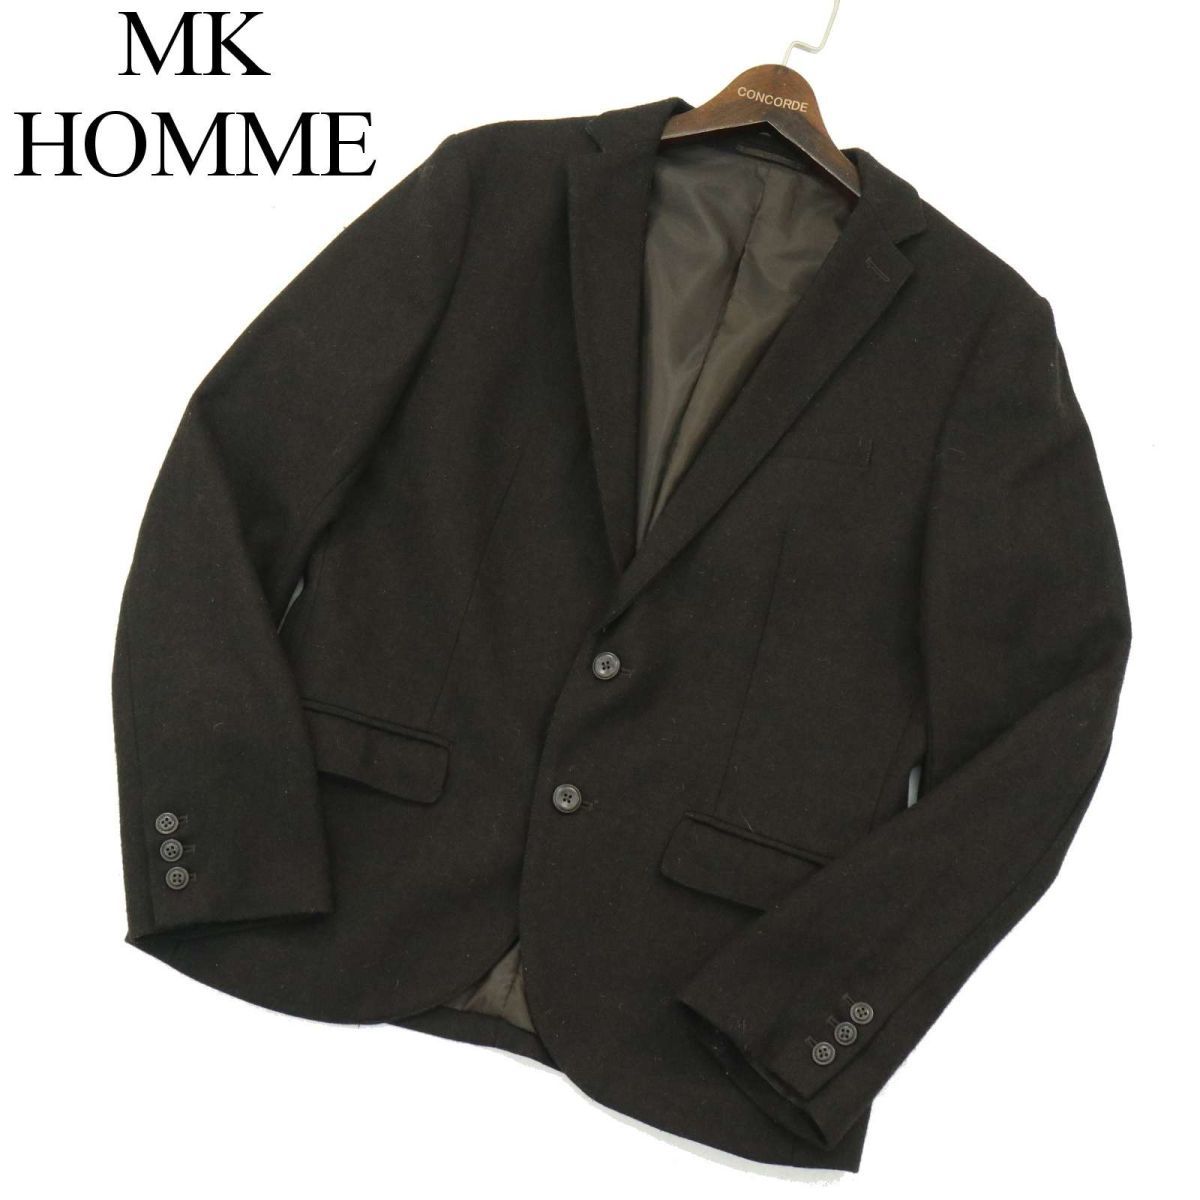 MK HOMME Michel Klein Homme autumn winter total reverse side wool * Anne navy blue tailored jacket Sz.50 men's A3T15033_C#N